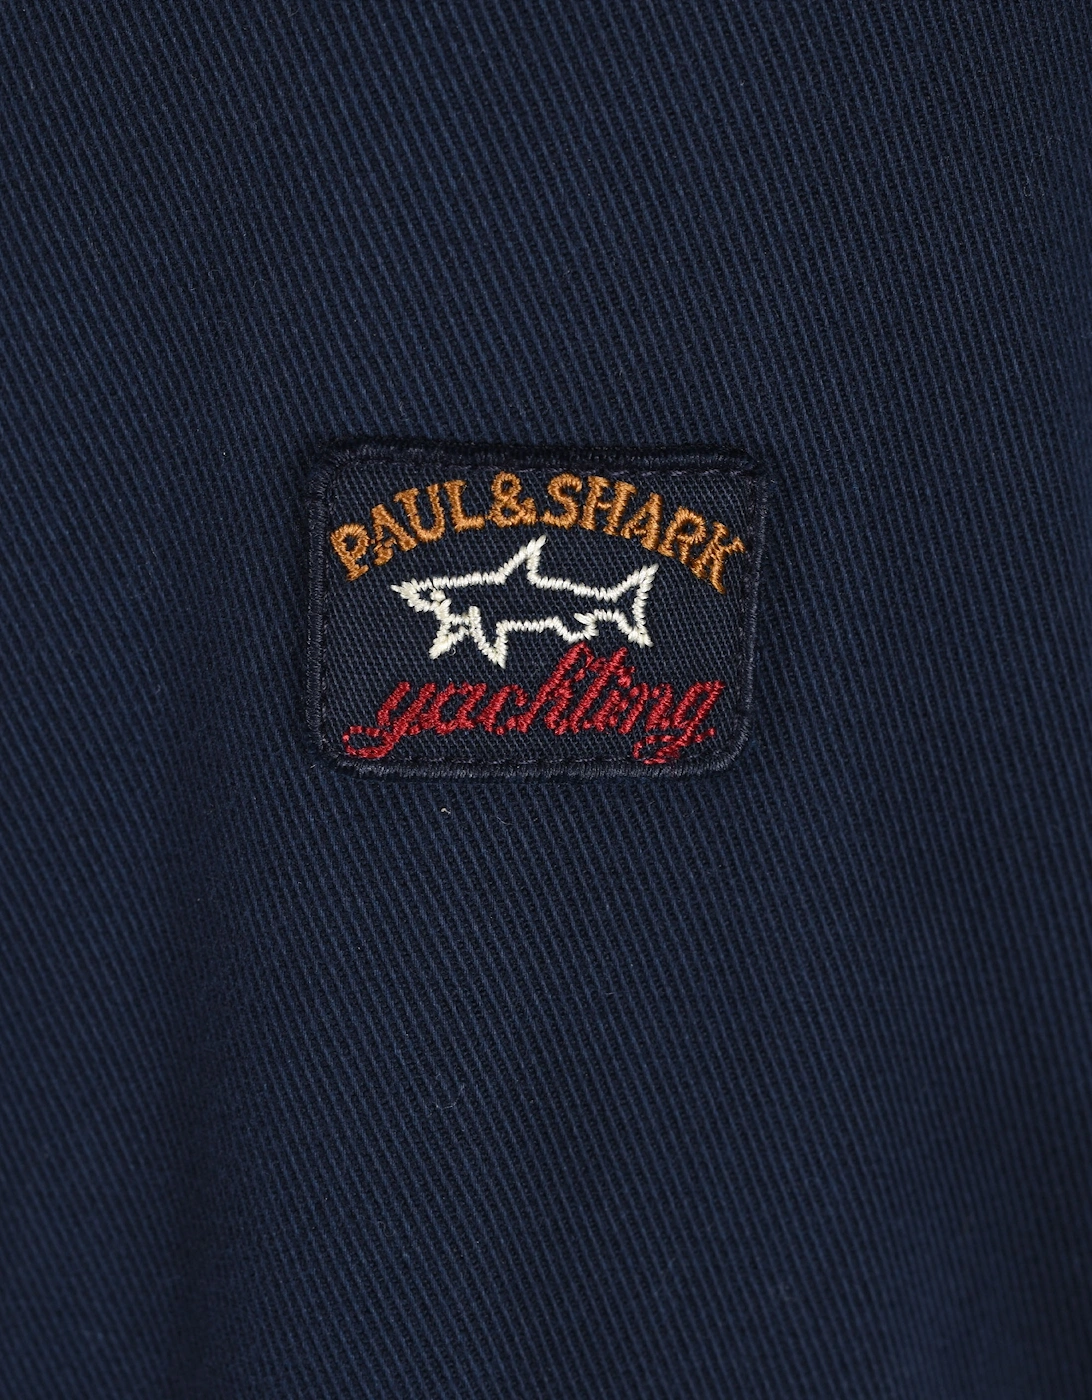 Paul And Shark Four Seasons Overshirt Navy